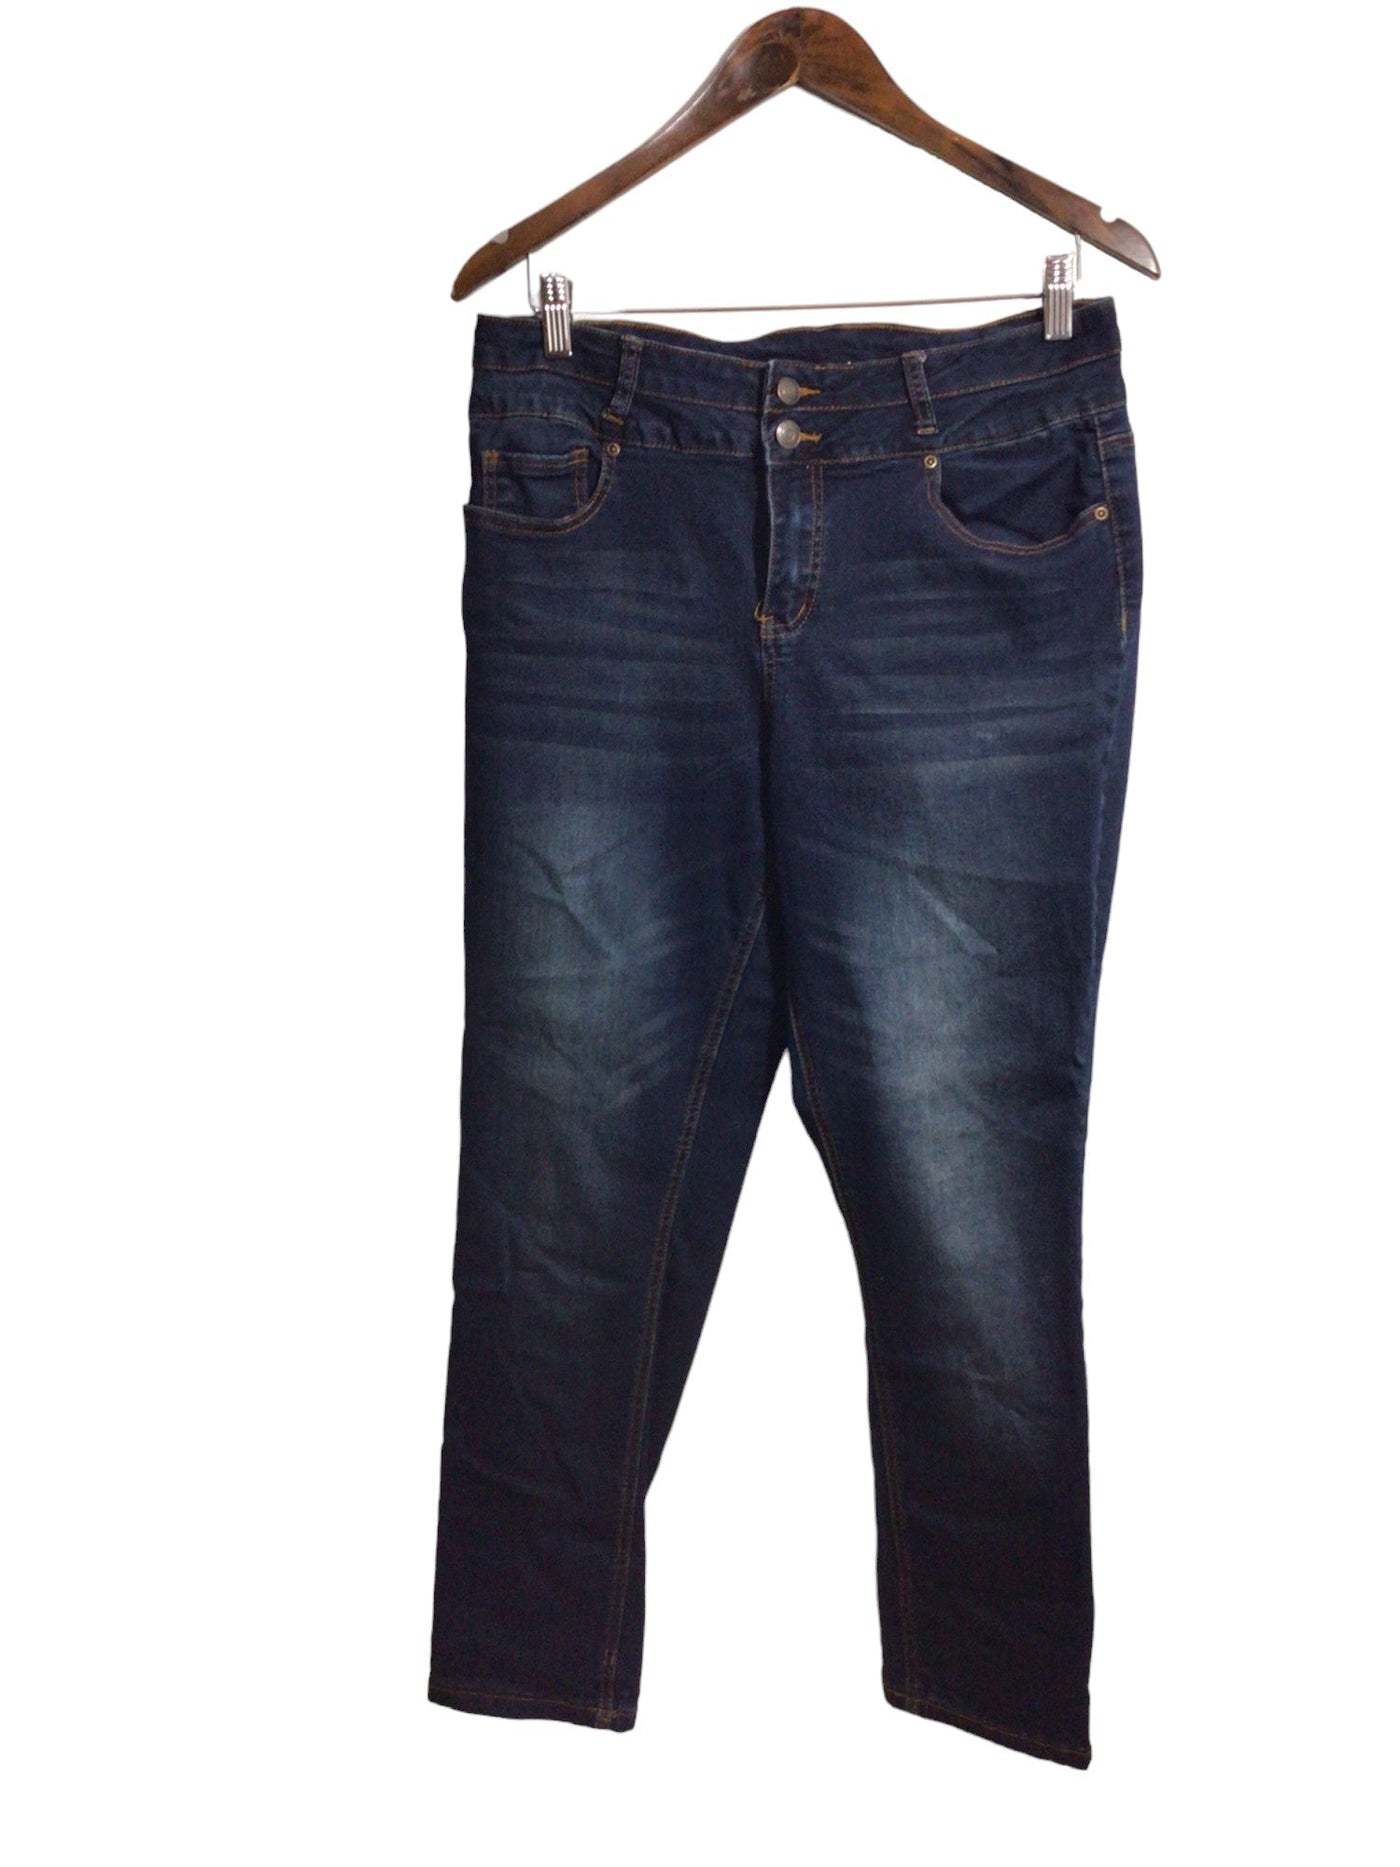 BLUENOTES Women Straight-Legged Jeans Regular fit in Blue - Size 34x28 | 16.5 $ KOOP